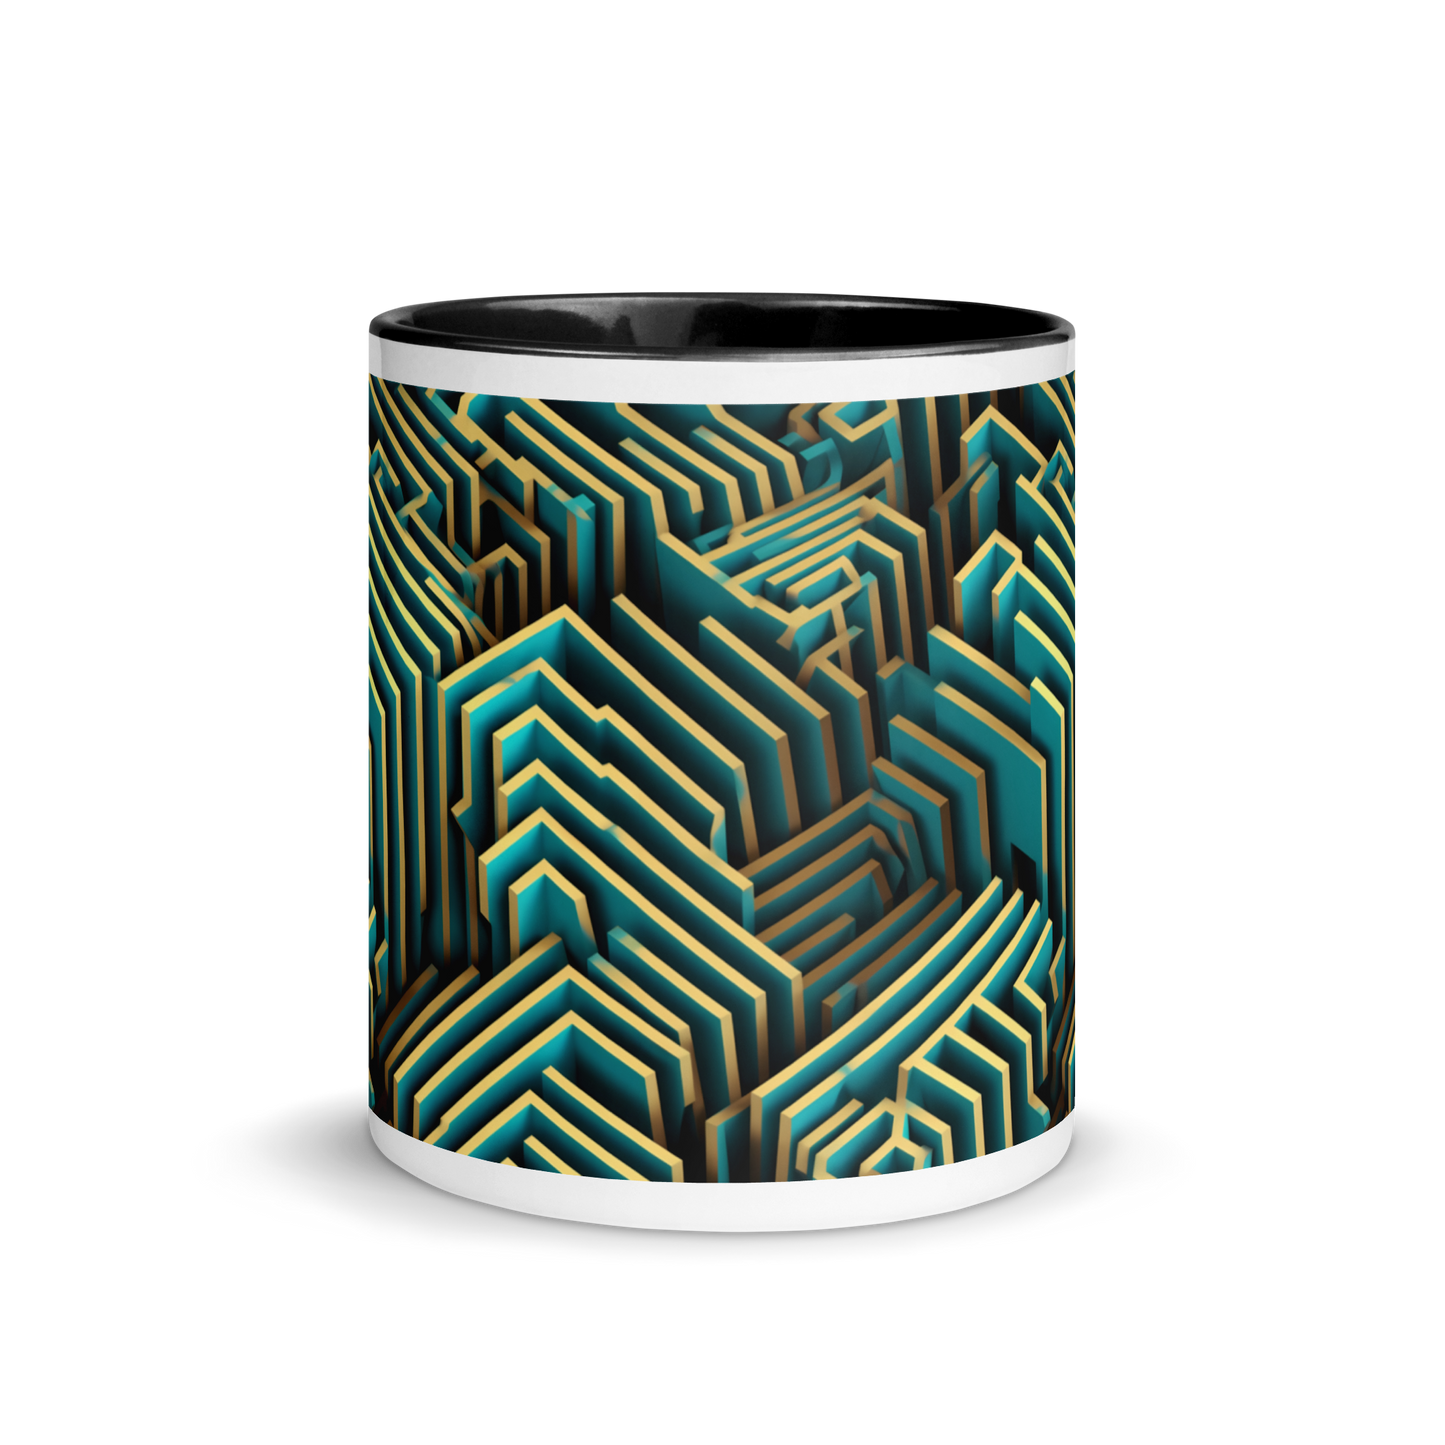 3D Maze Illusion | 3D Patterns | White Ceramic Mug with Color Inside - #5